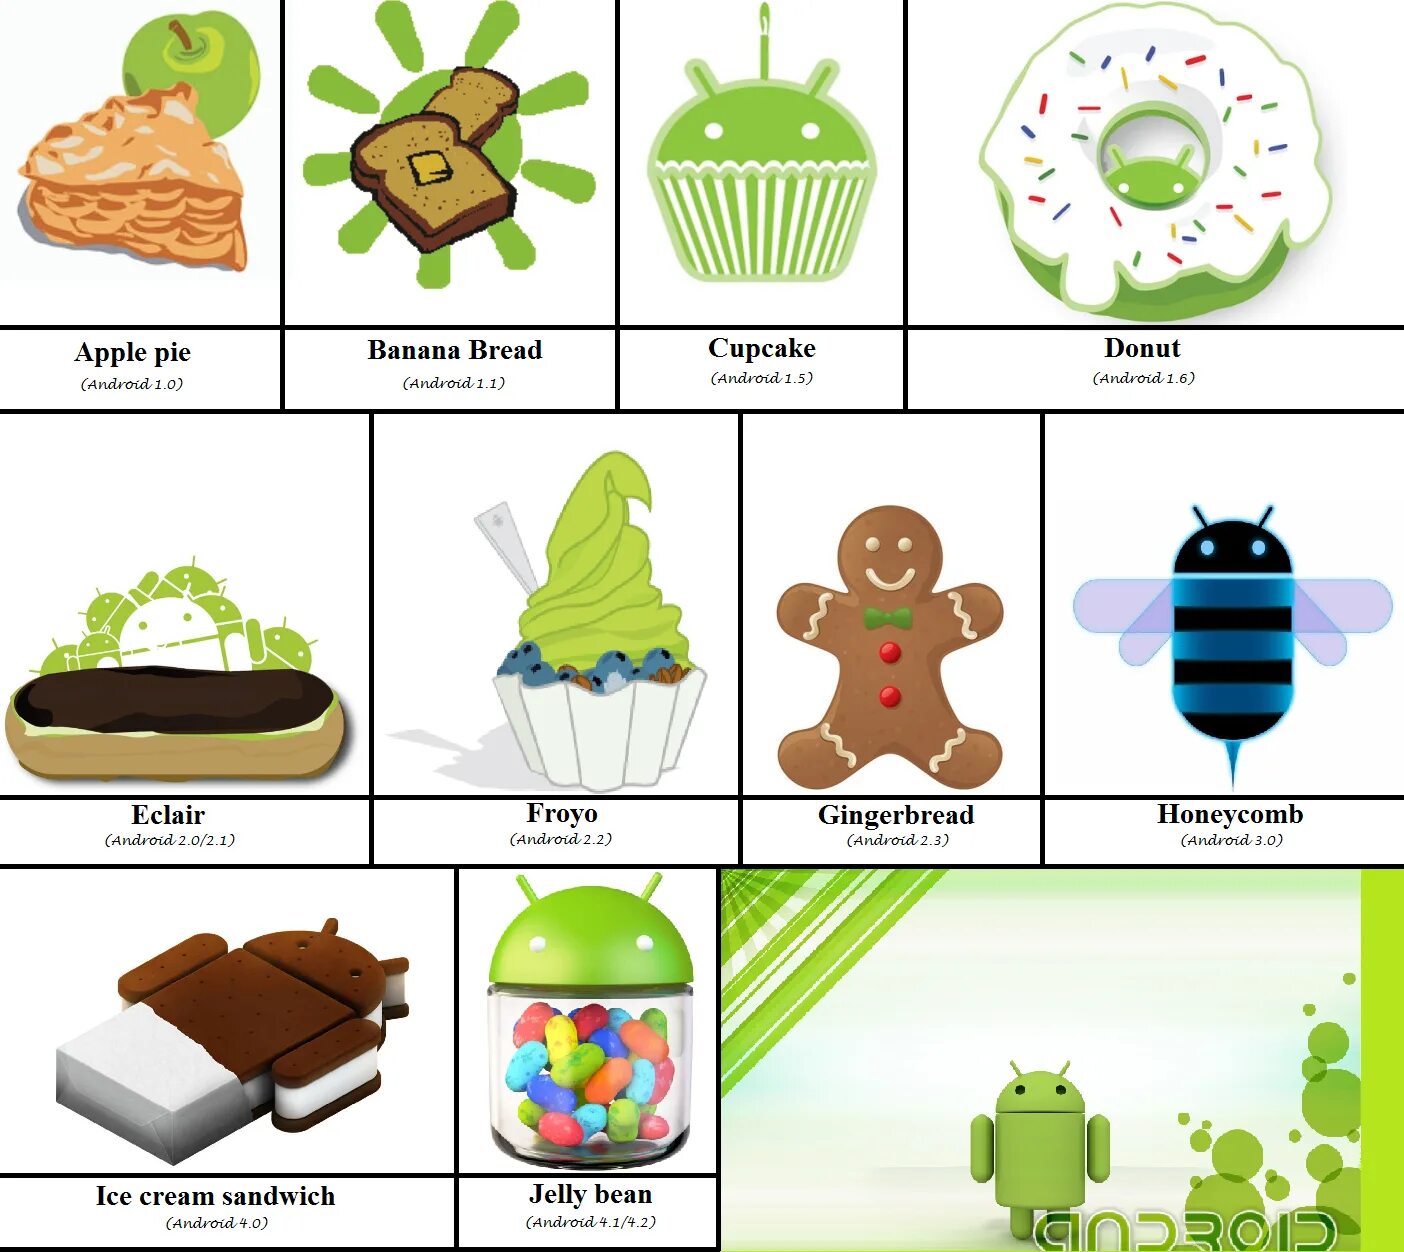 Андроид 1.0. Android 1.0 Apple pie. Android 1.1. Android Cupcake телефоны. Android года выпуска